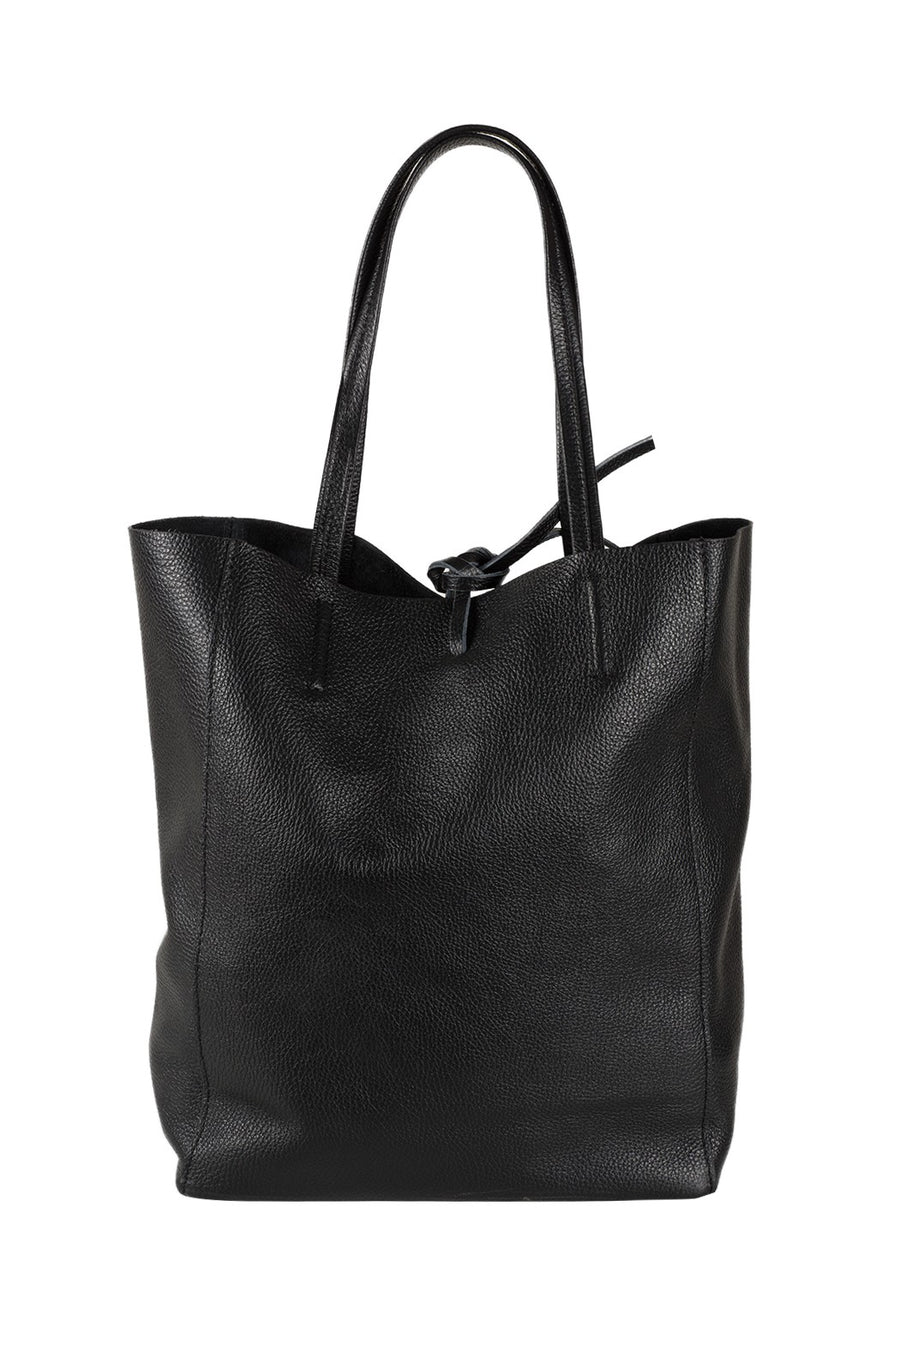 Italian leather shopper tote bag tie top black